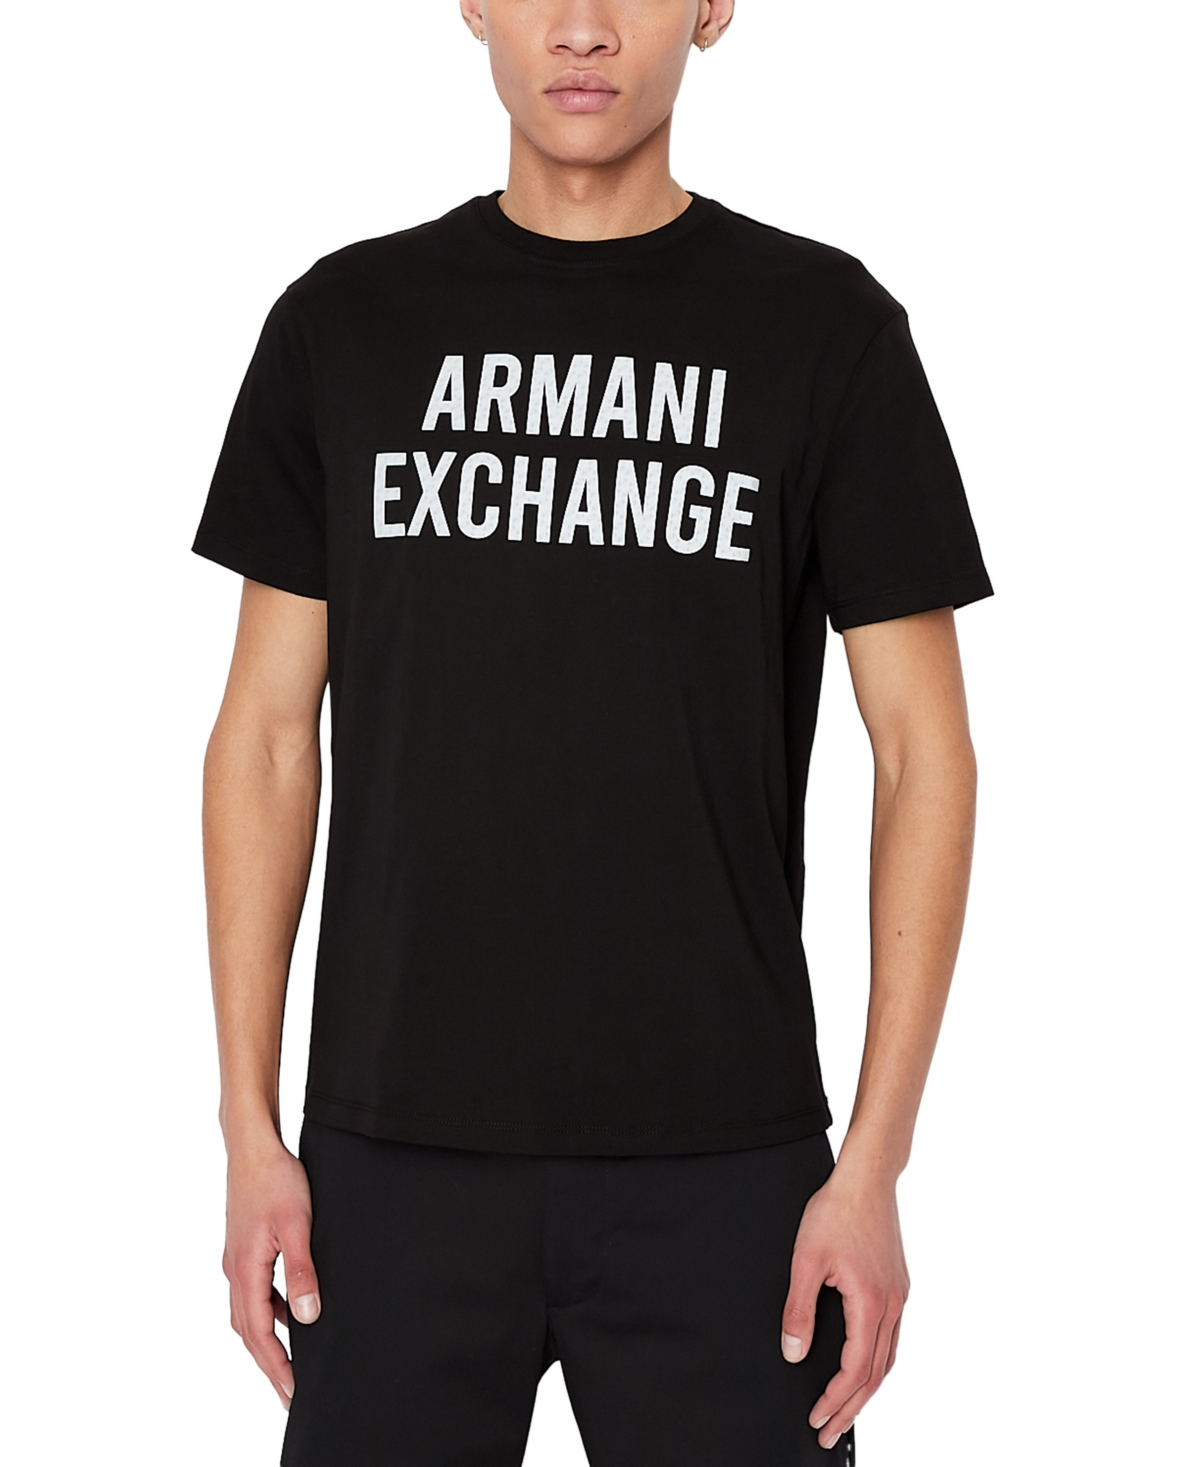 Shop Now For The AX Armani Exchange Men's Iridescent Logo T-Shirt ...